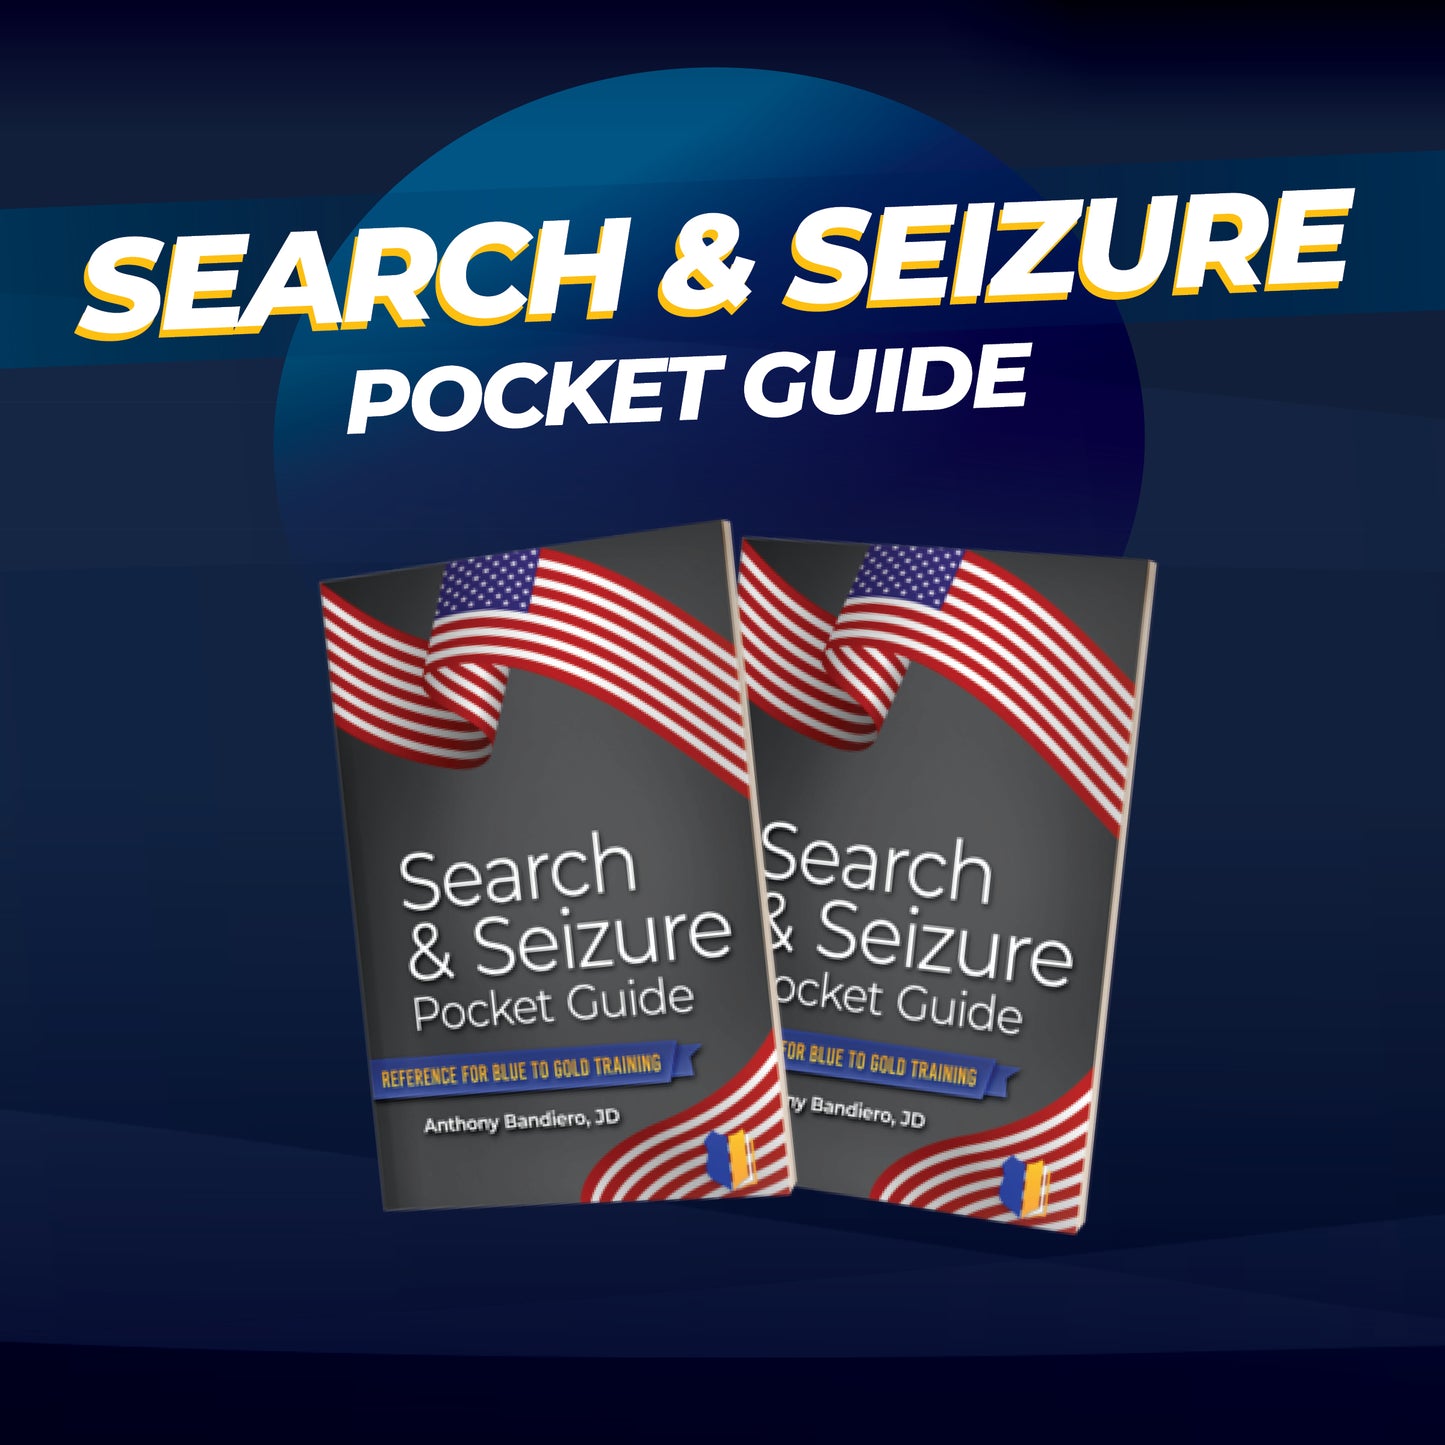 Search & Seizure Pocket Guide